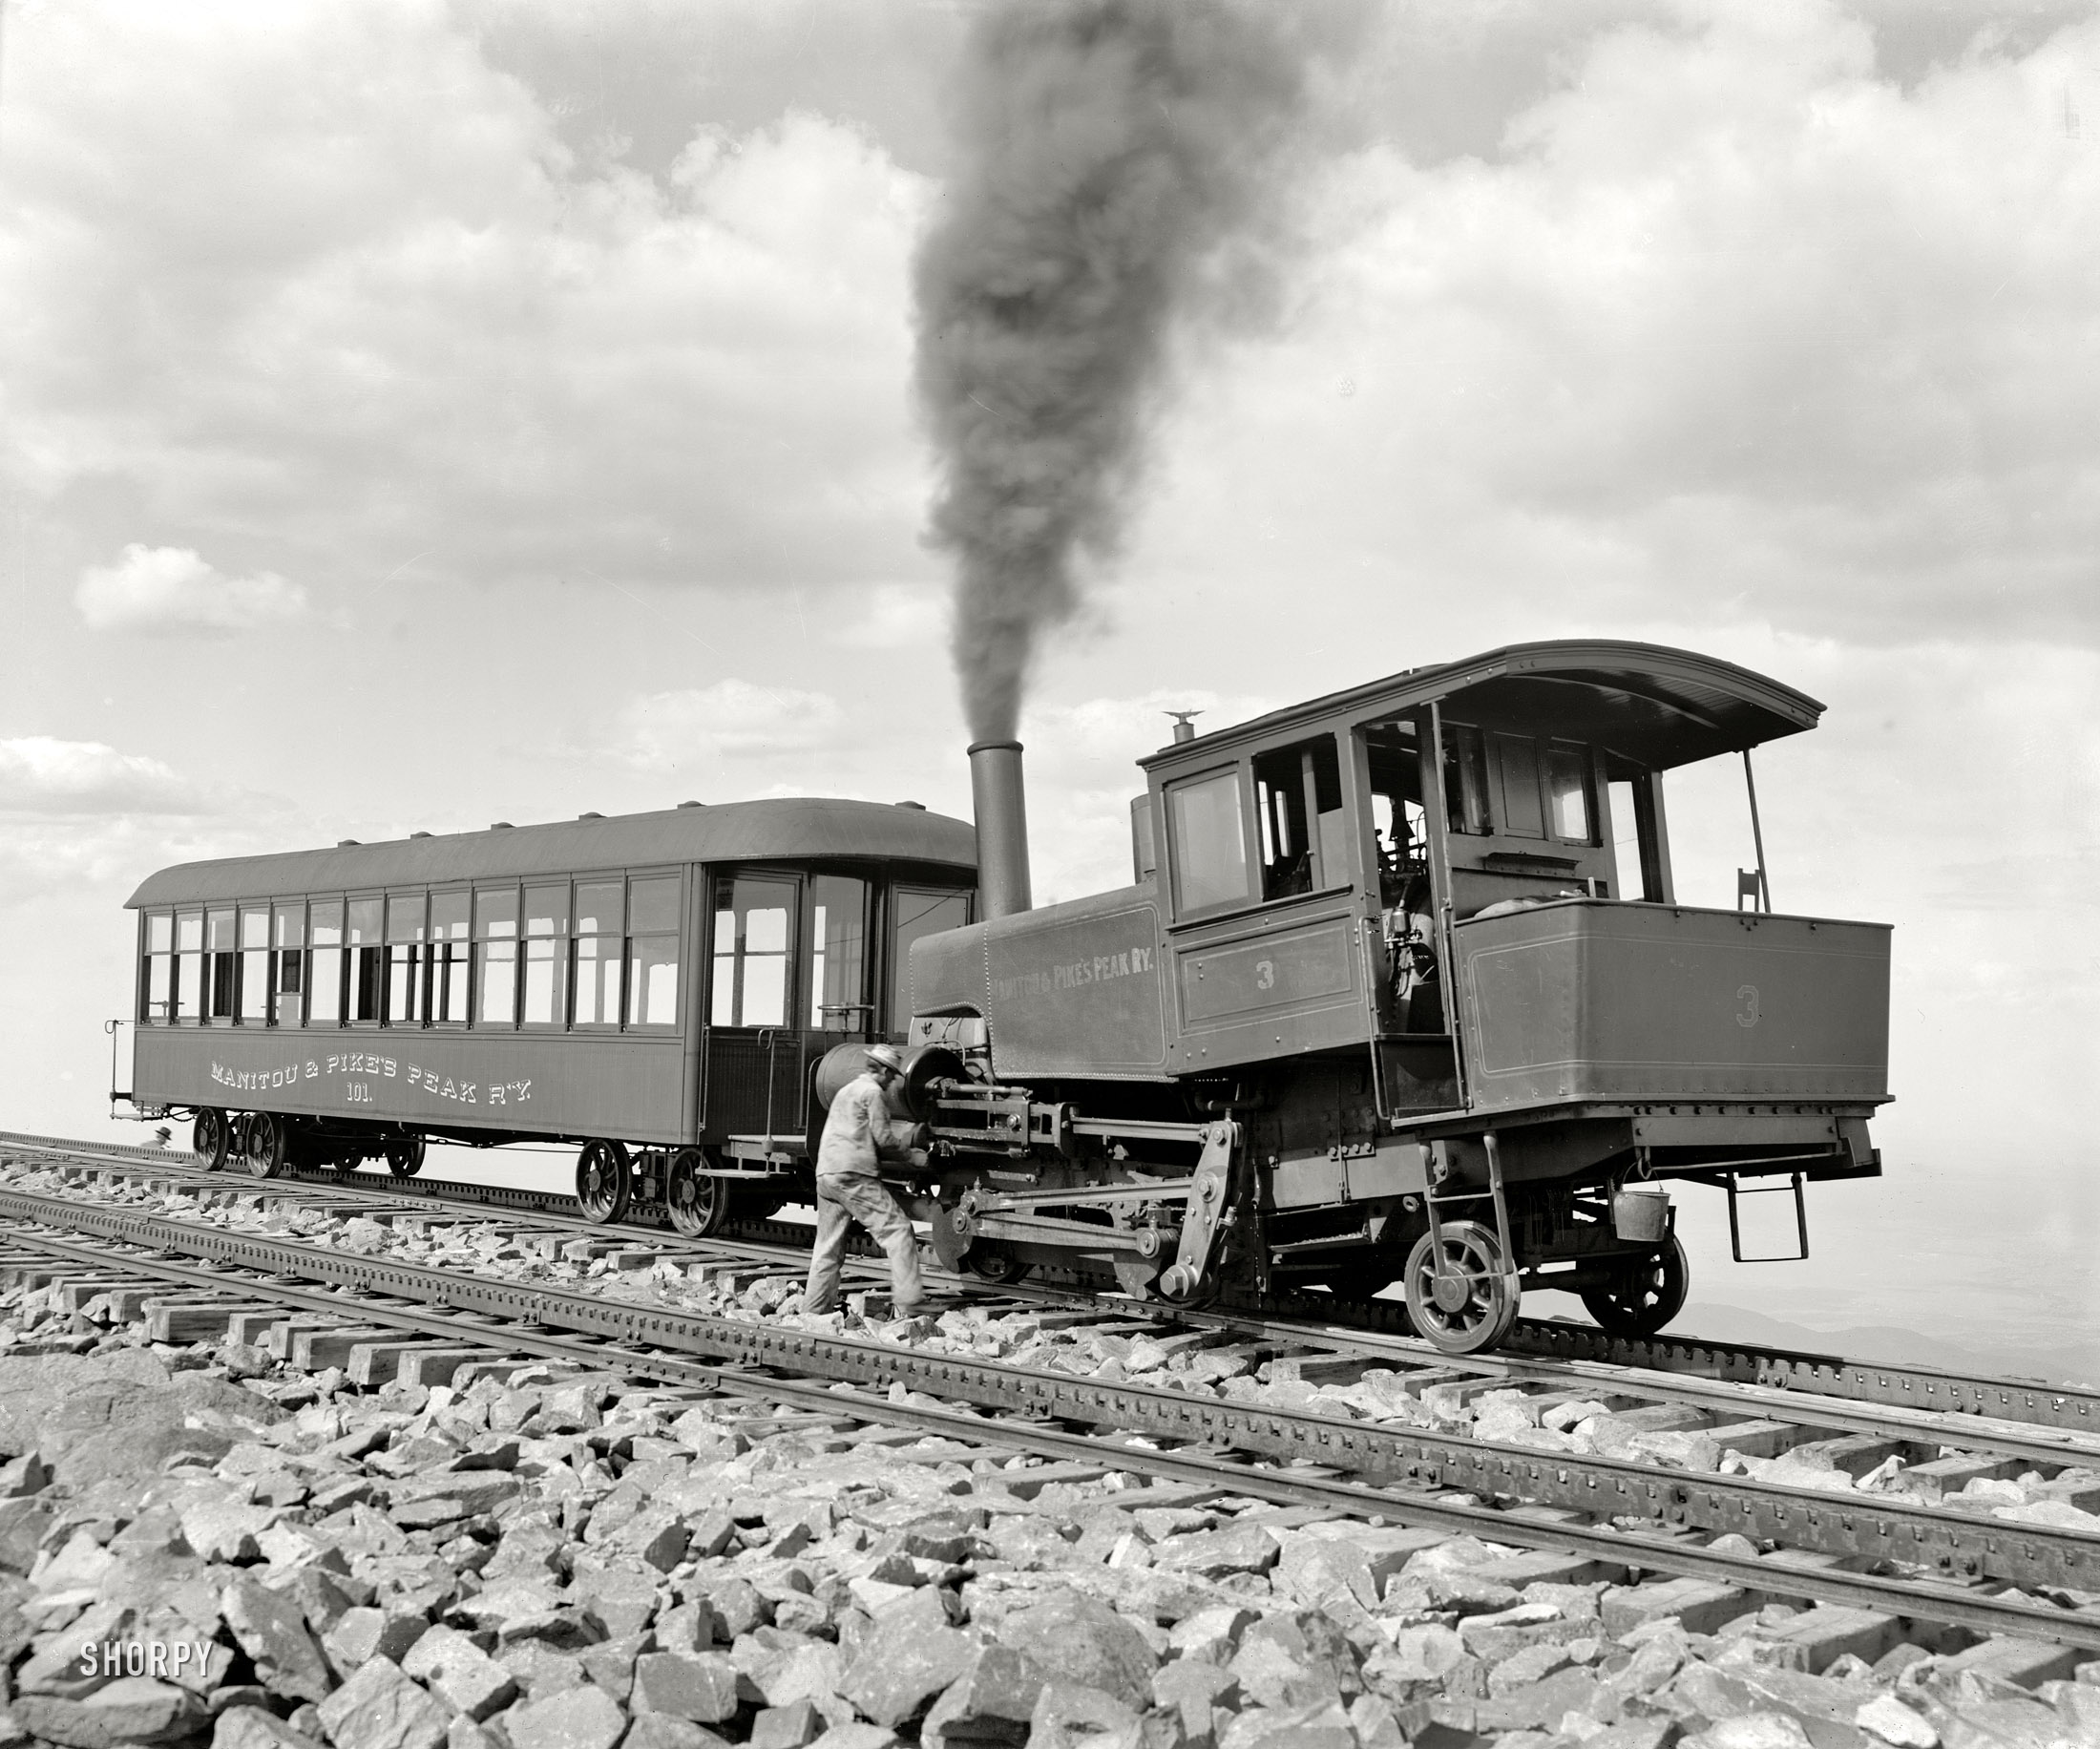 Pikes Peak, Colorado, circa 1900. "Summit, cog wheel train, Manitou and Pike's Peak Railway." 8x10 glass negative by William Henry Jackson. View full size.